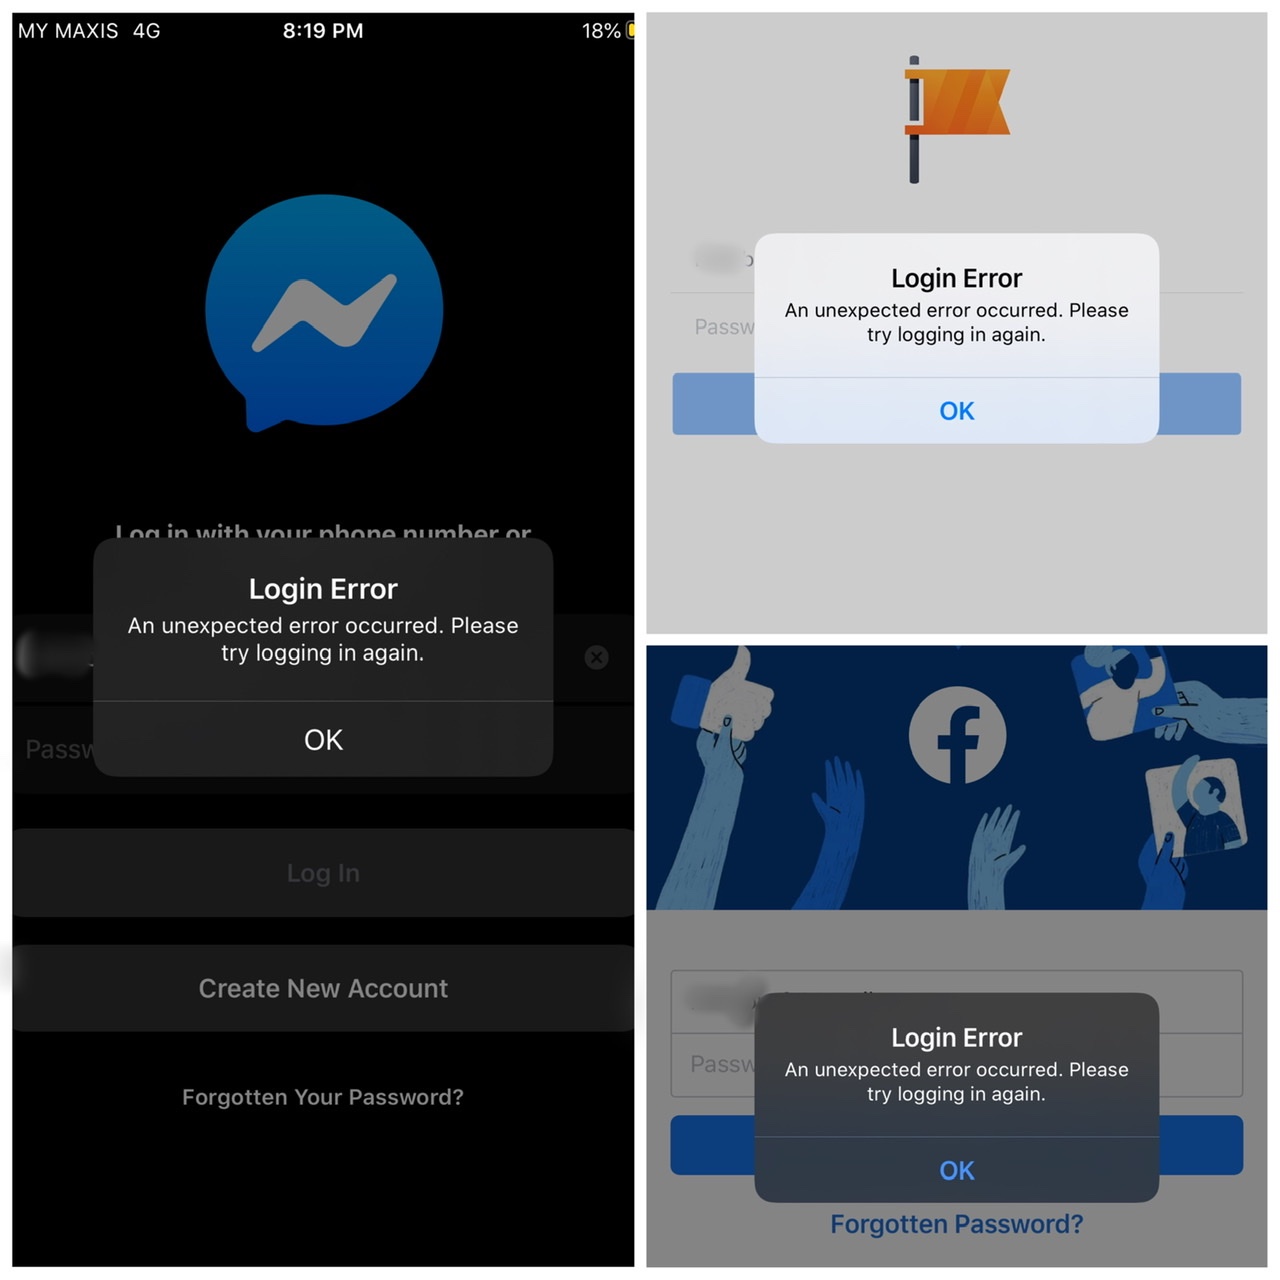 Facebook App/Messenger login error - Apple Community